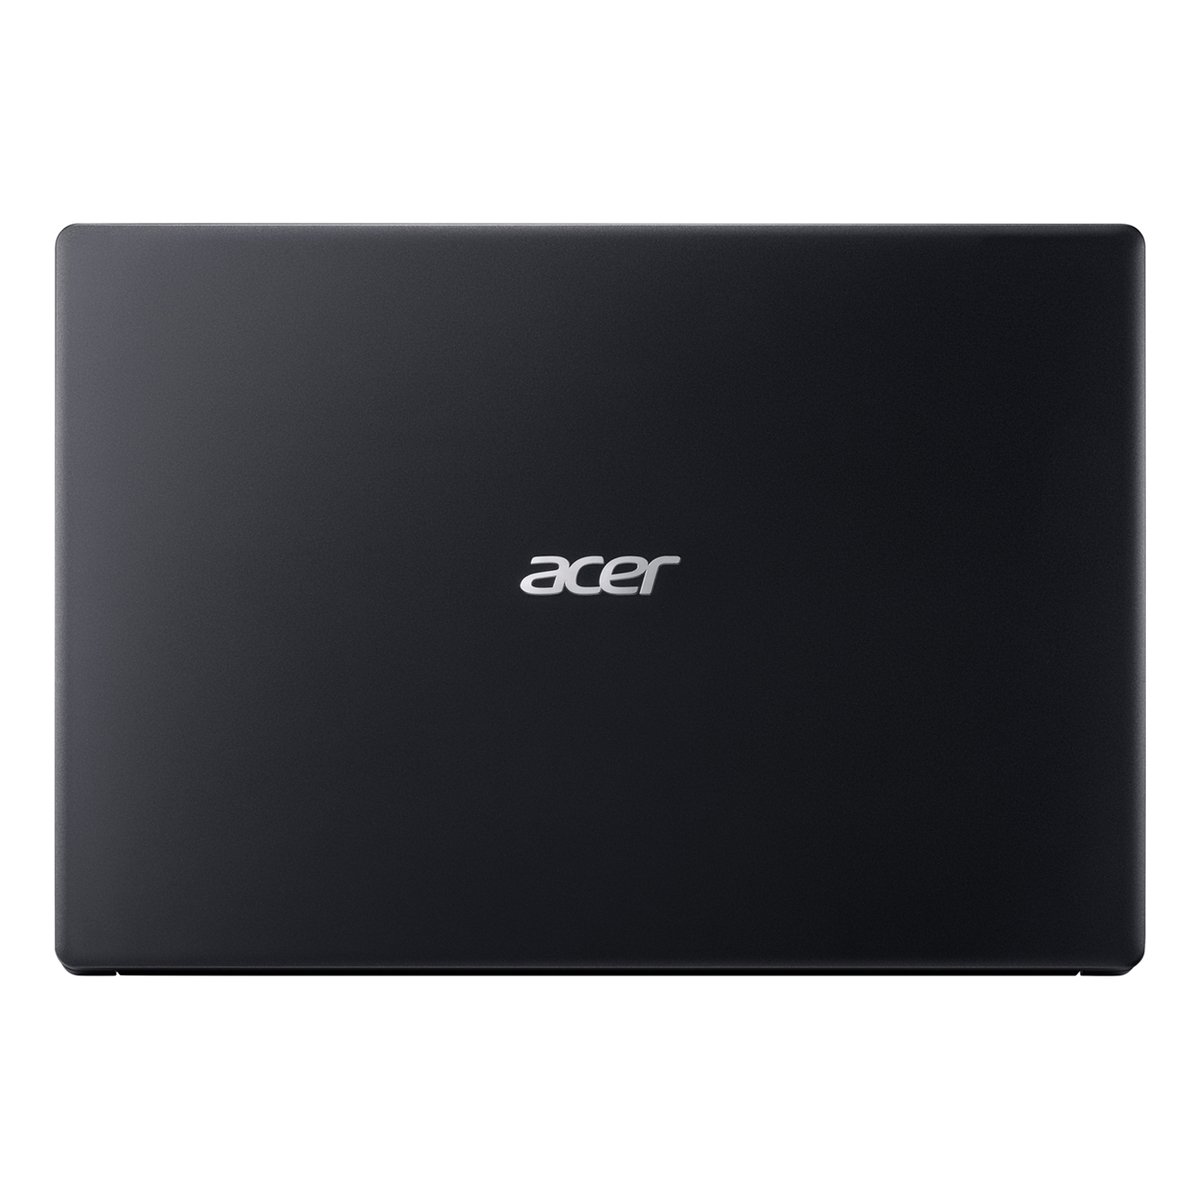 Acer Notebook Aspire 3 A315-NXH1AEM006 Core i5 Black